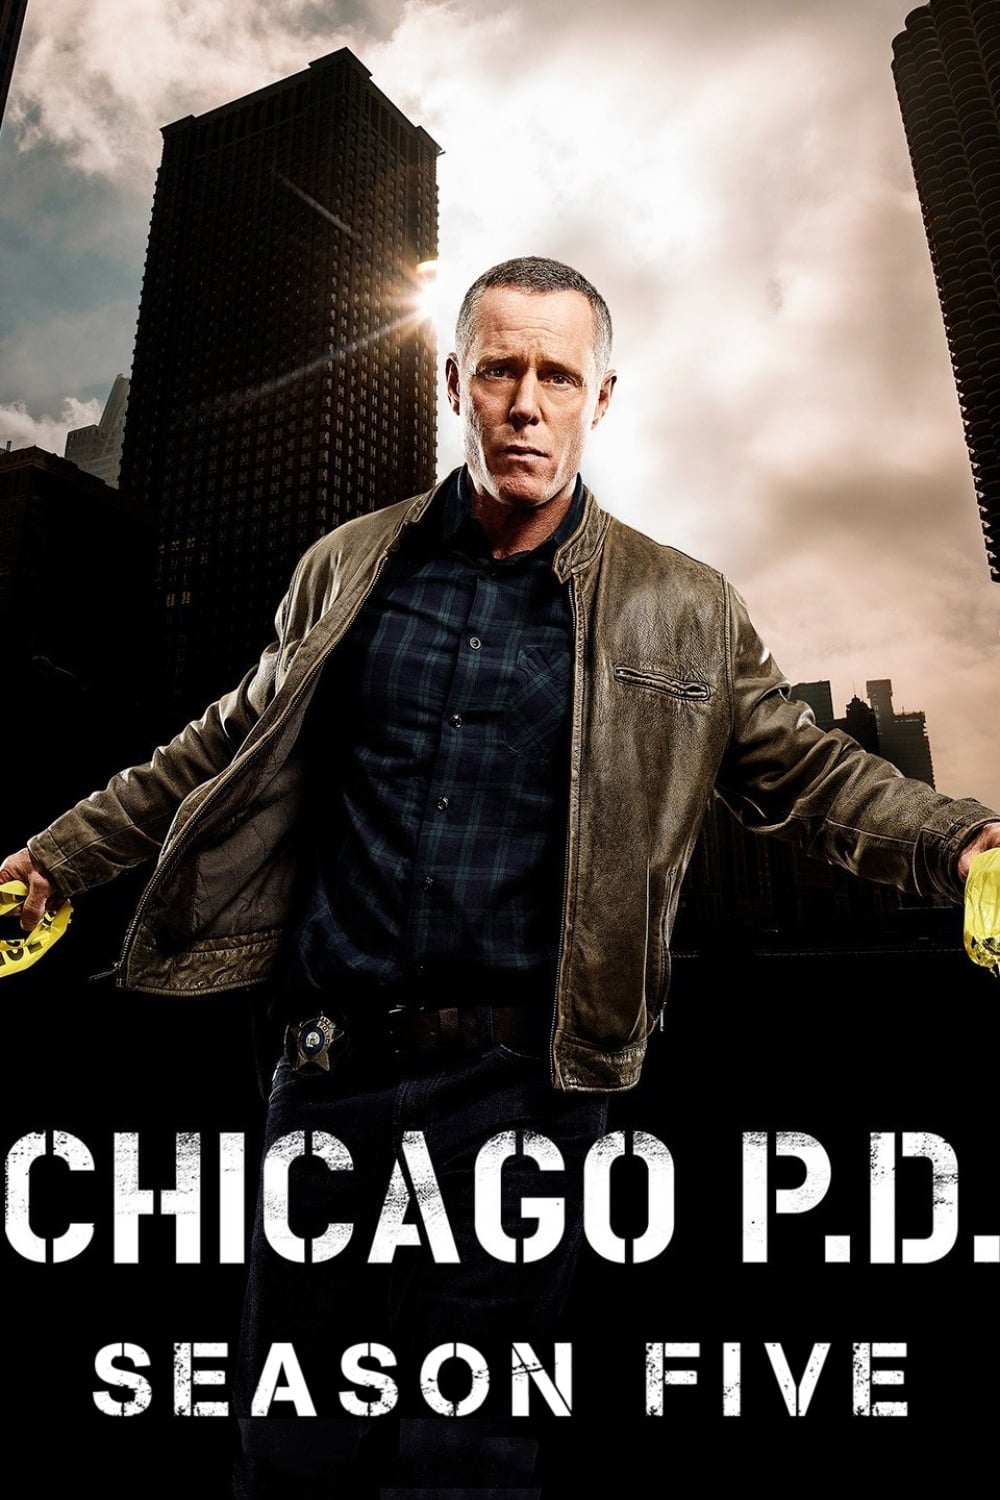 Chicago Police Department - Saison 5 wiflix